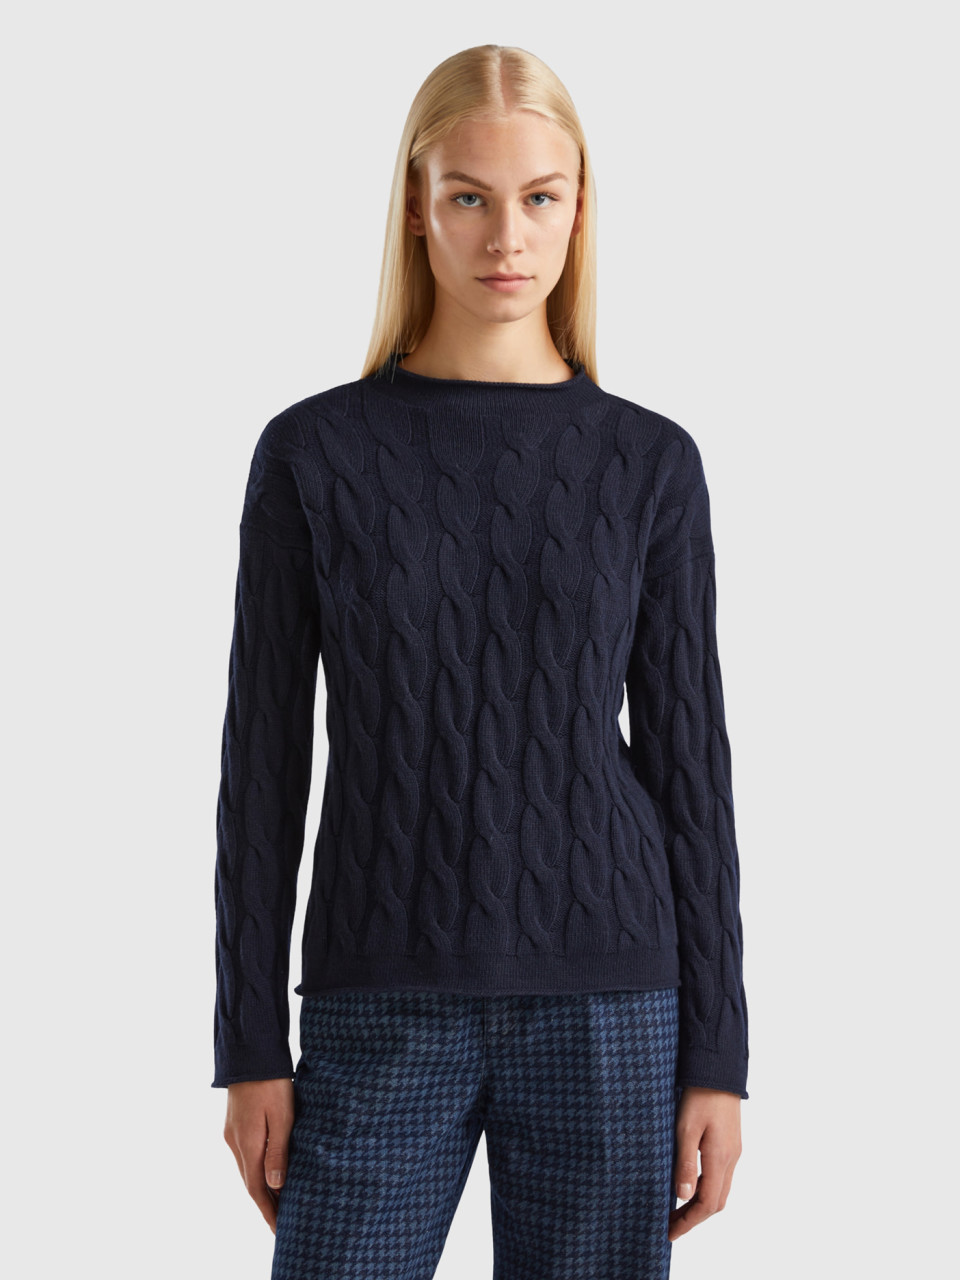 Benetton, Cable Knit Sweater, Dark Blue, Women